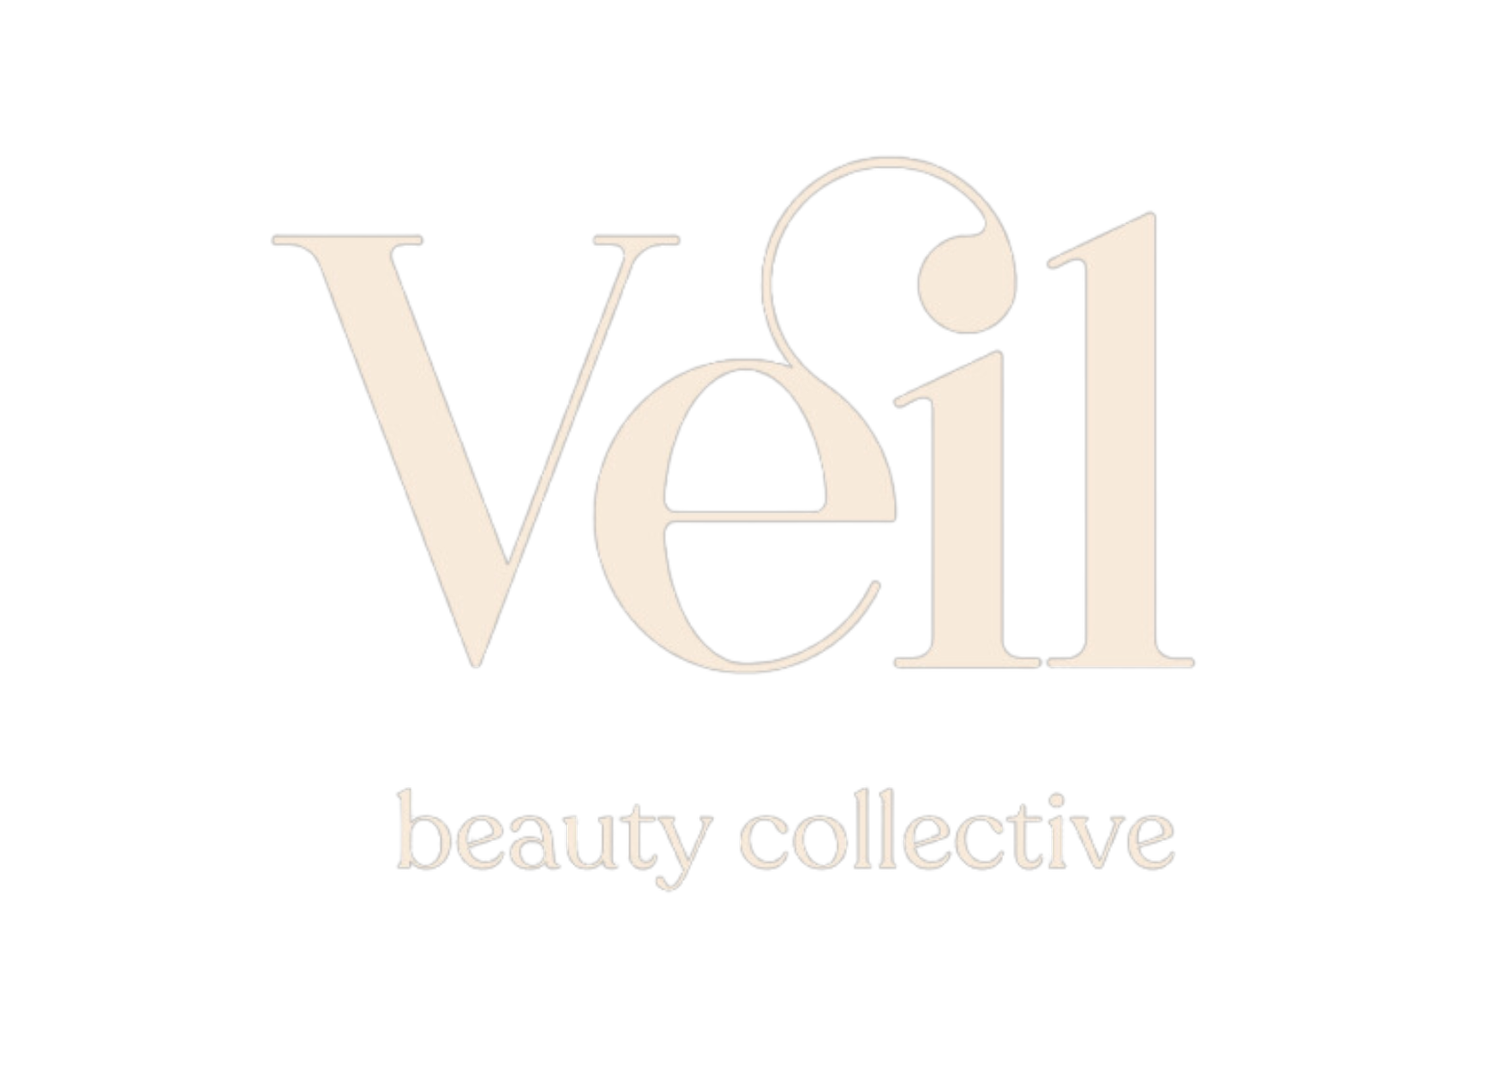 Veil Beauty Collective